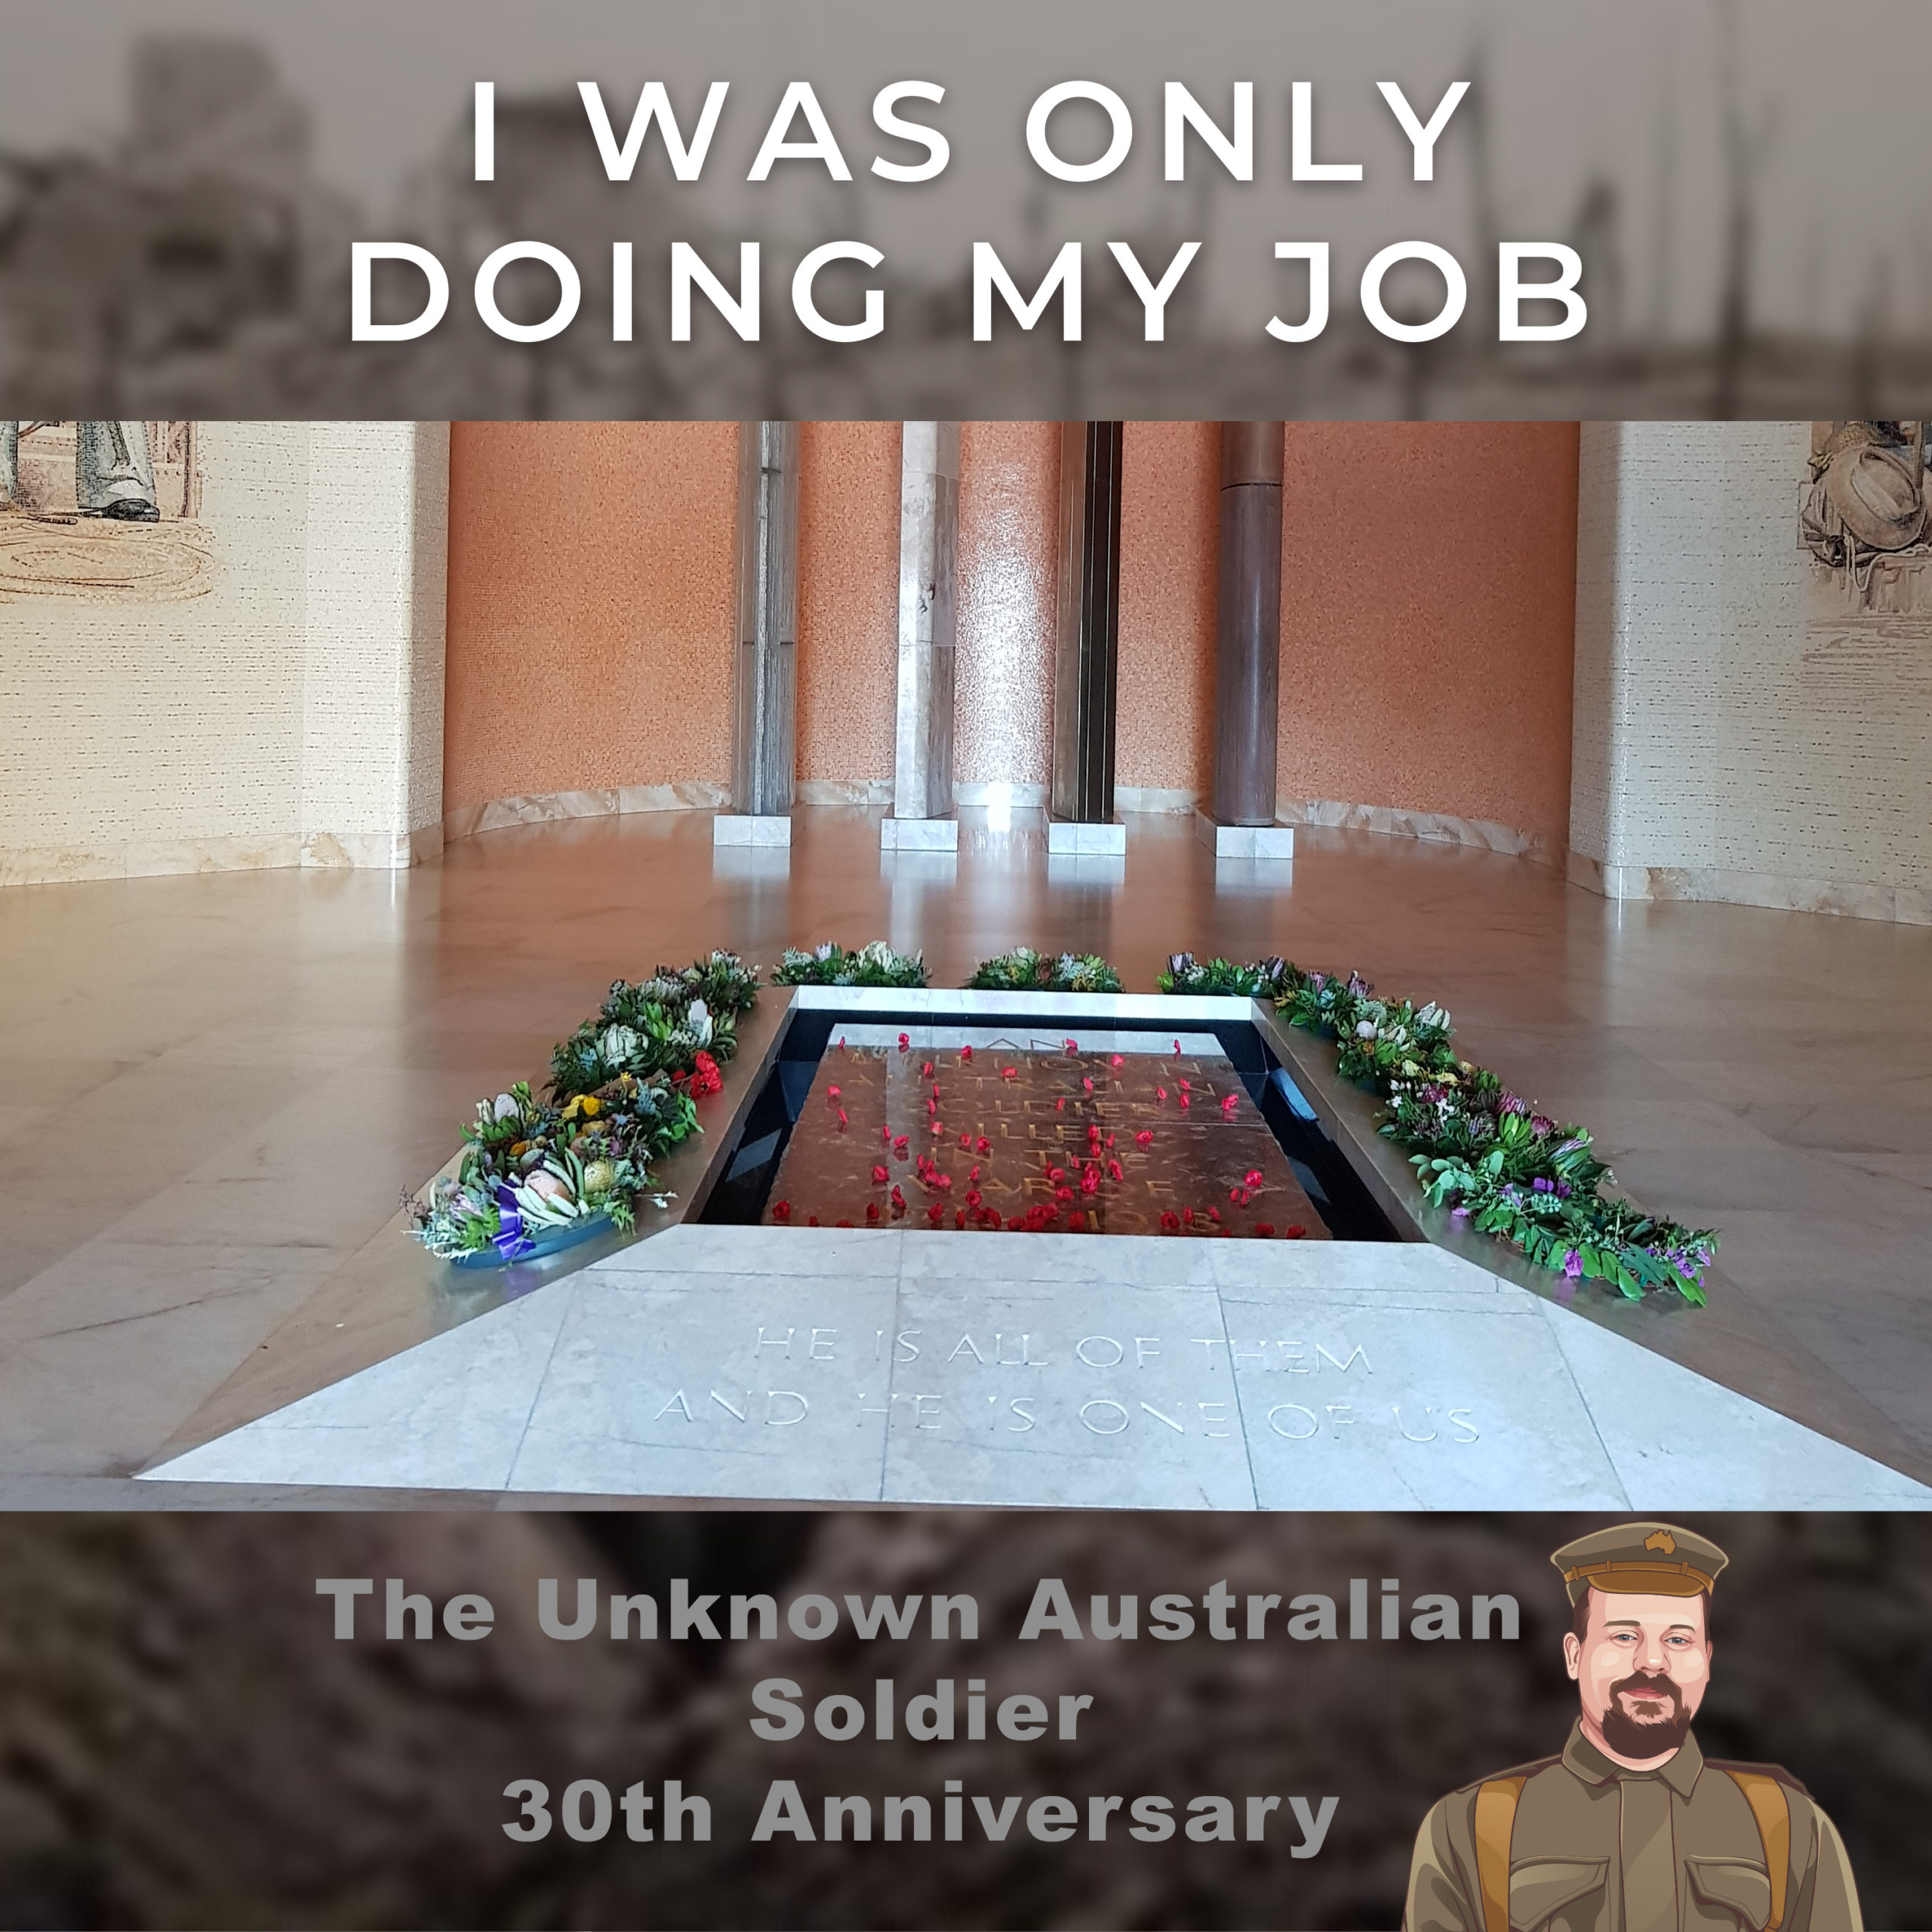 The Unknown Australian Soldier